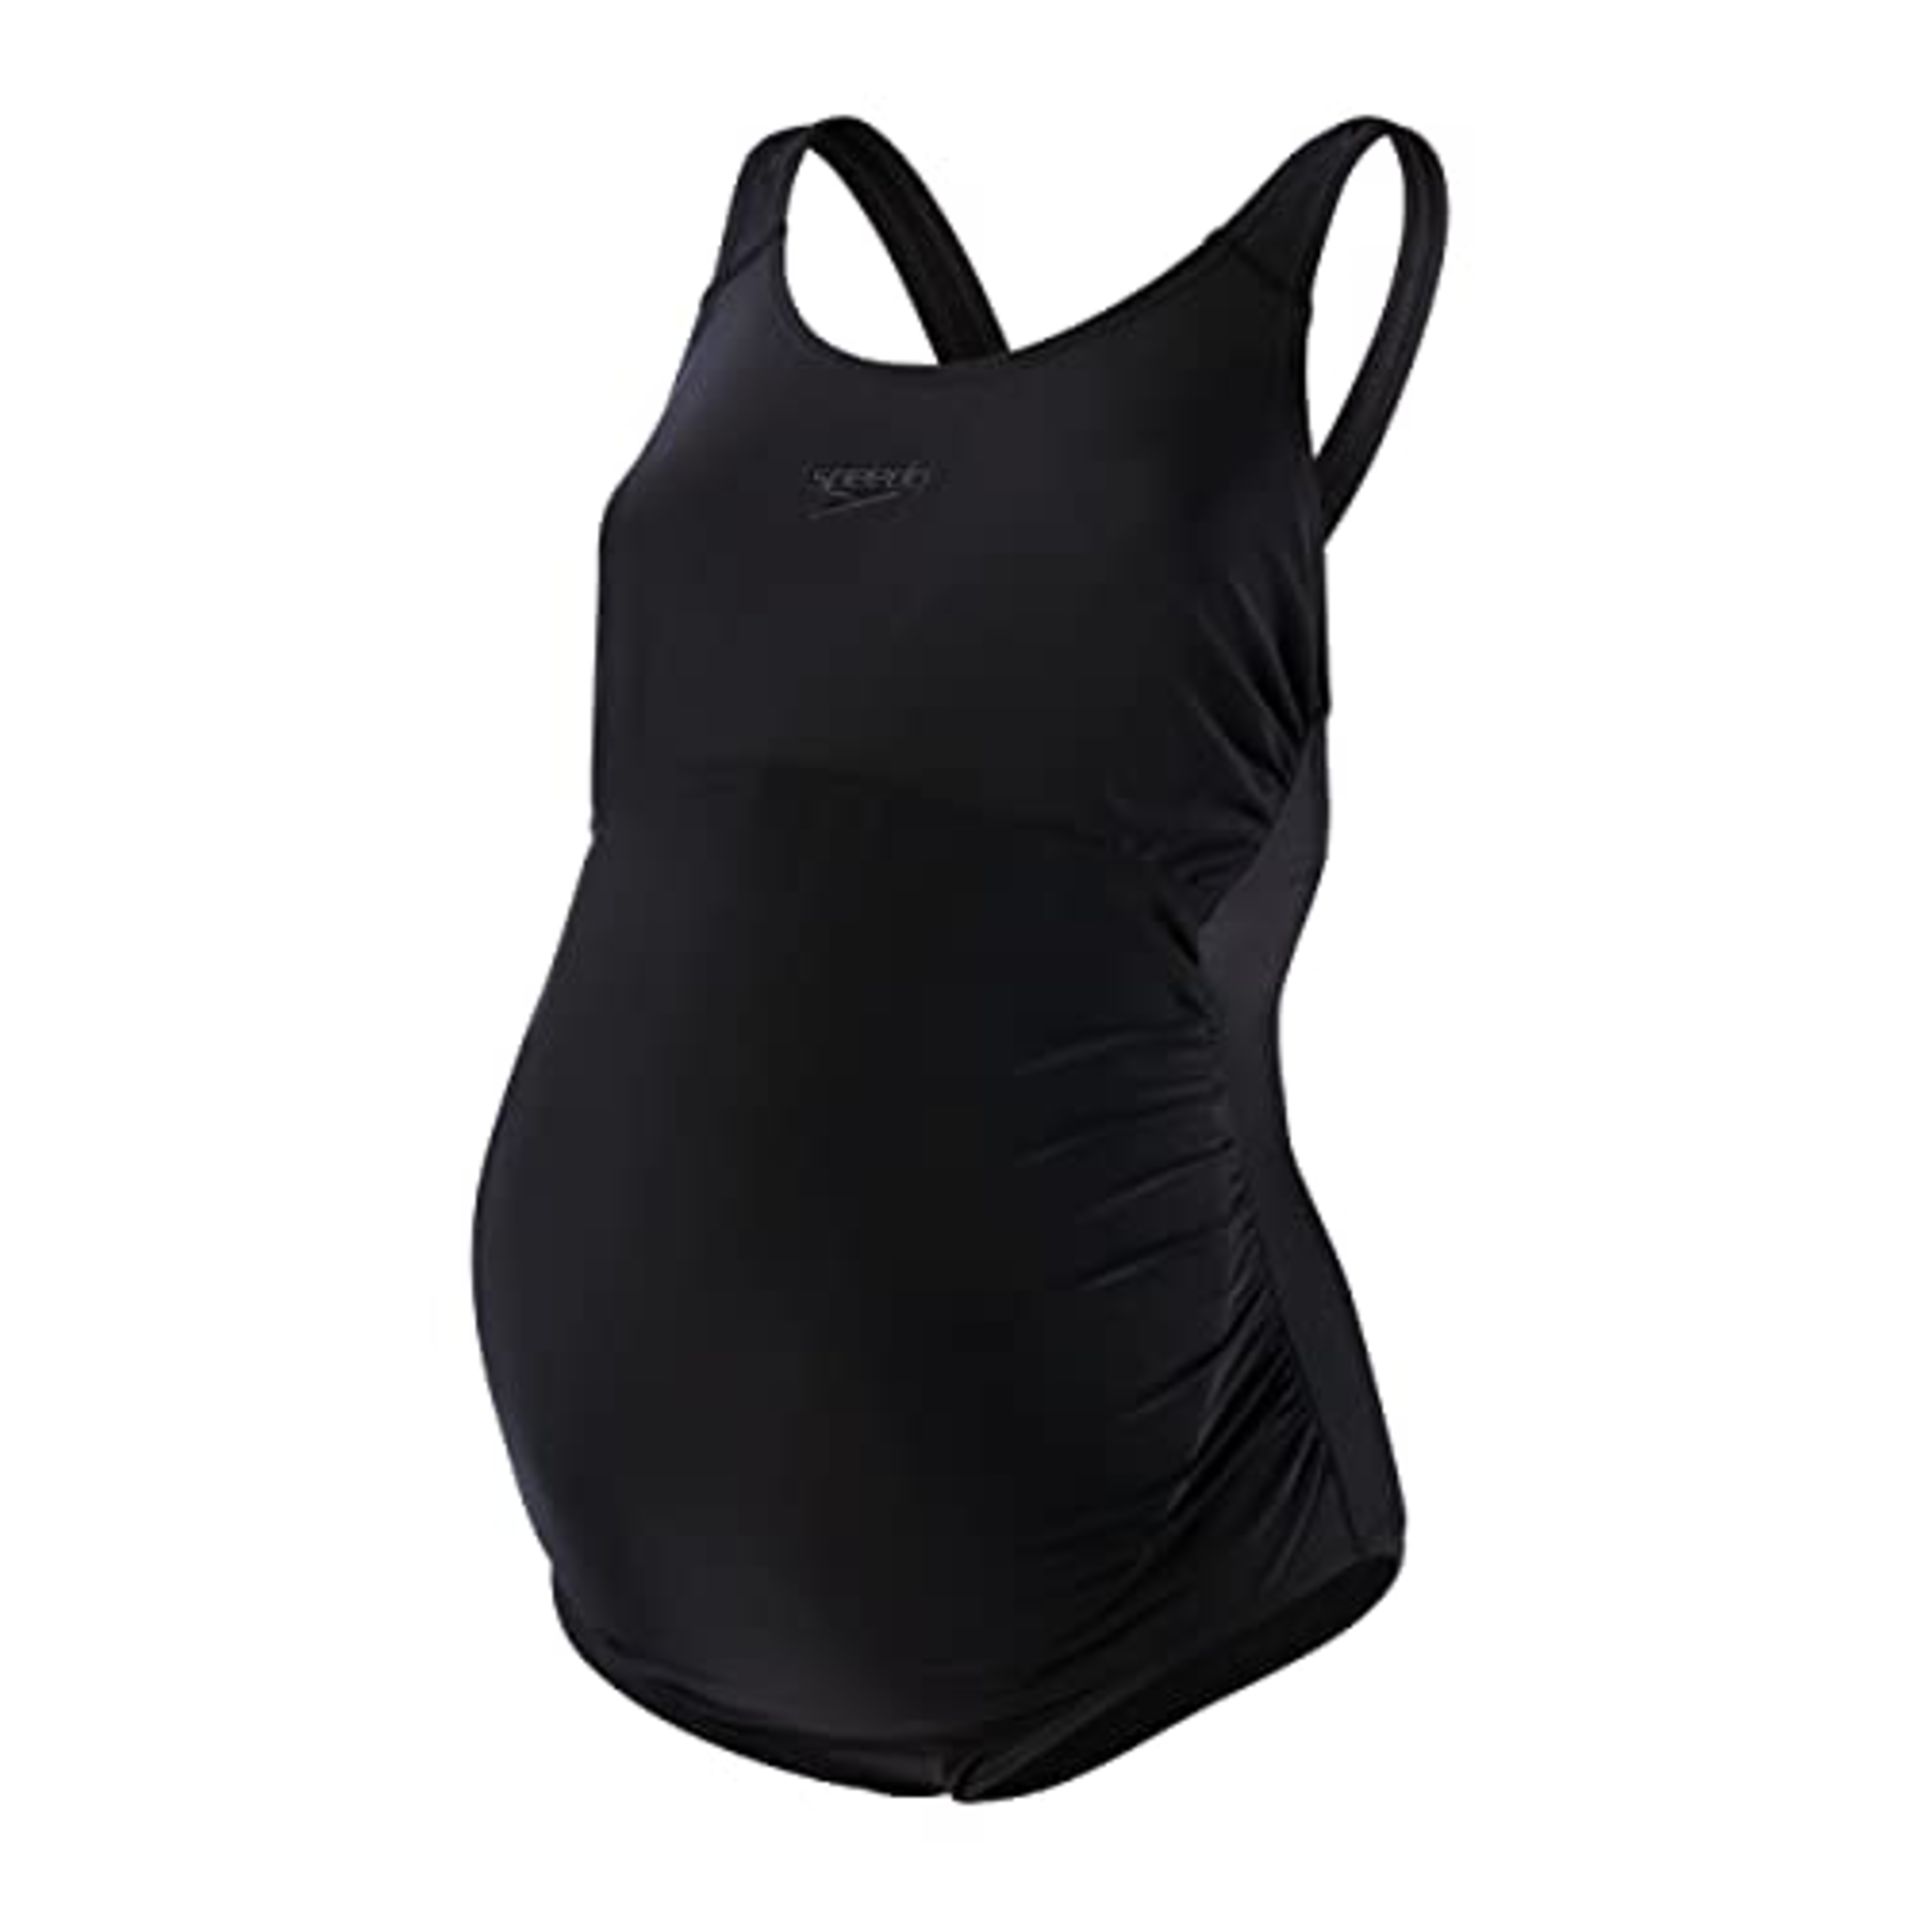 Speedo Maternity Fitness 1 Piece Swimsuit for Women, Black.